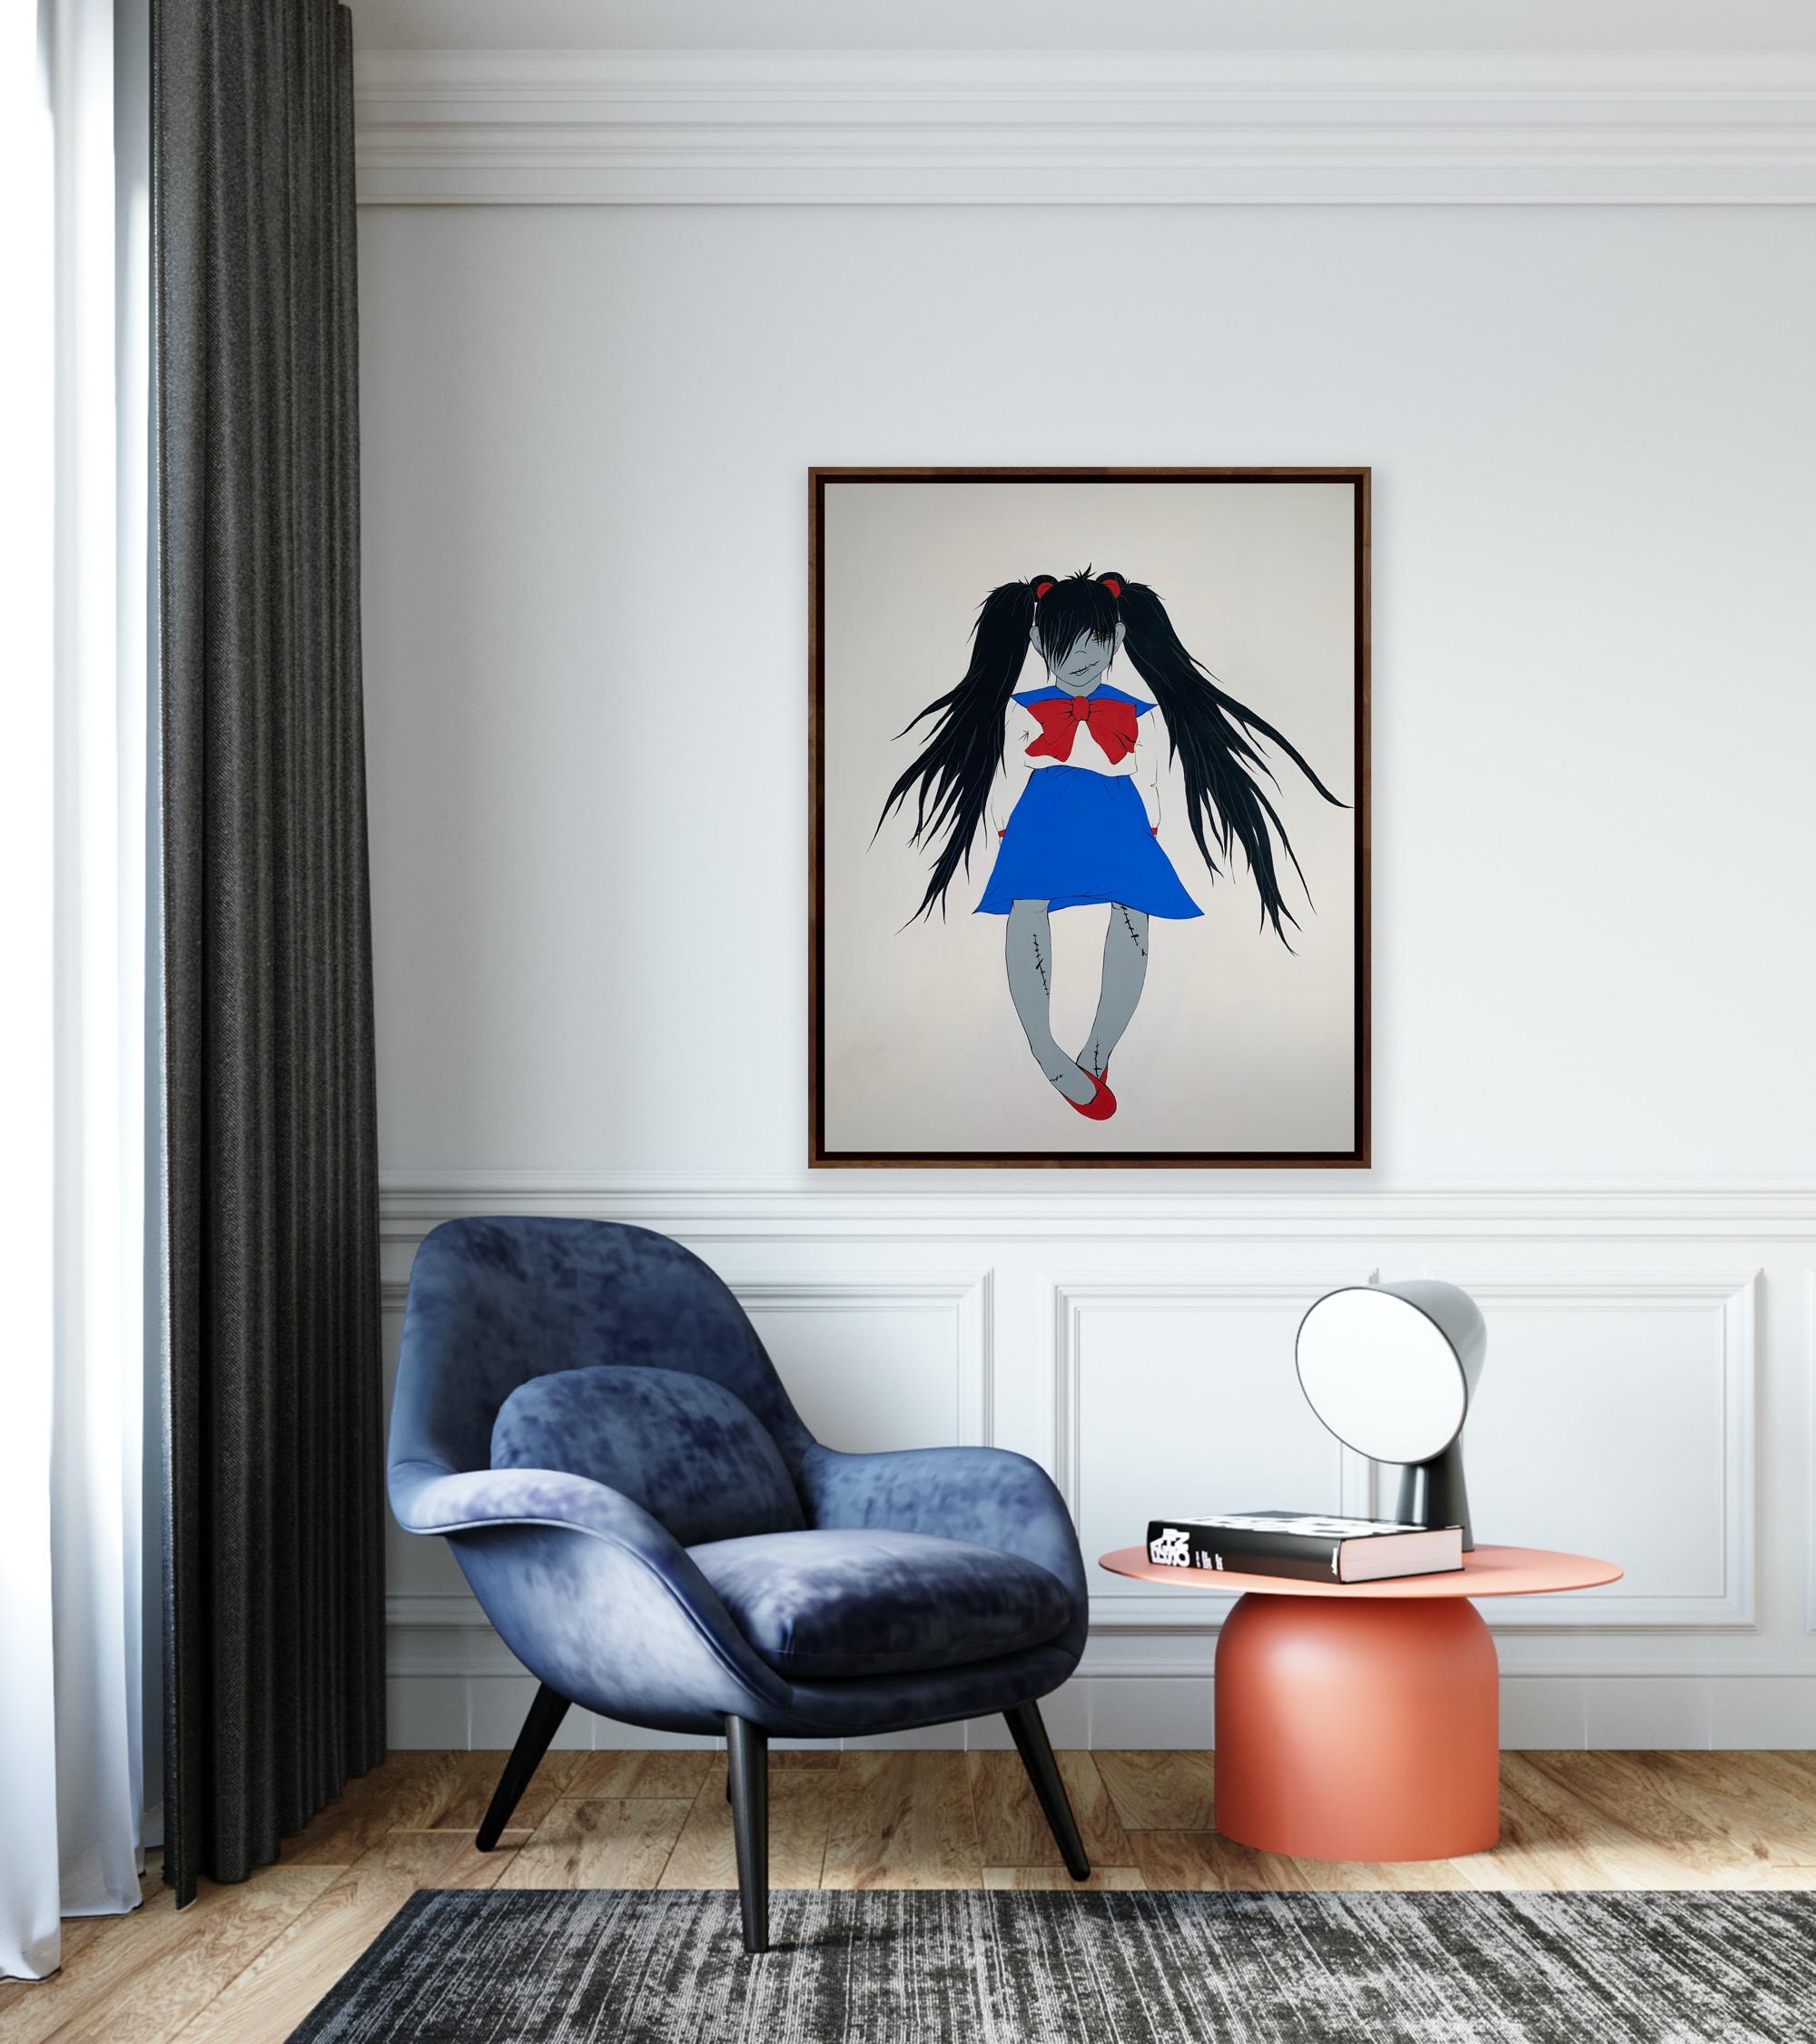 Zombie girl fan of Sailor Moon
100x80cm.Tempera/canvas